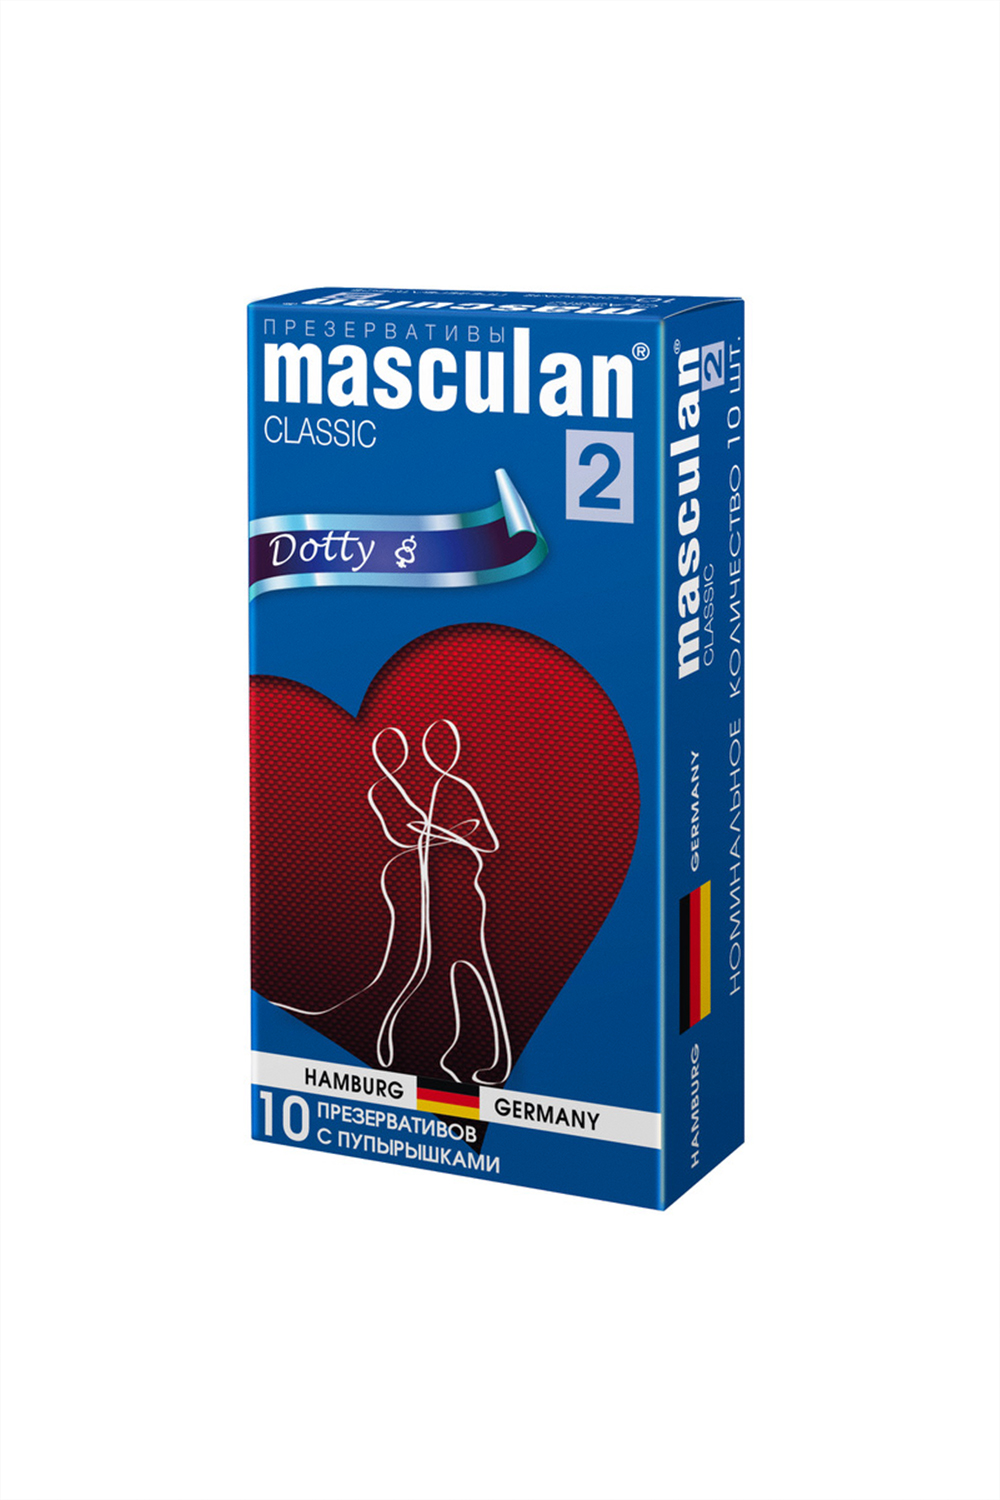 Презервативы Masculan Classic 2 Doty розовые 19 см 10 шт